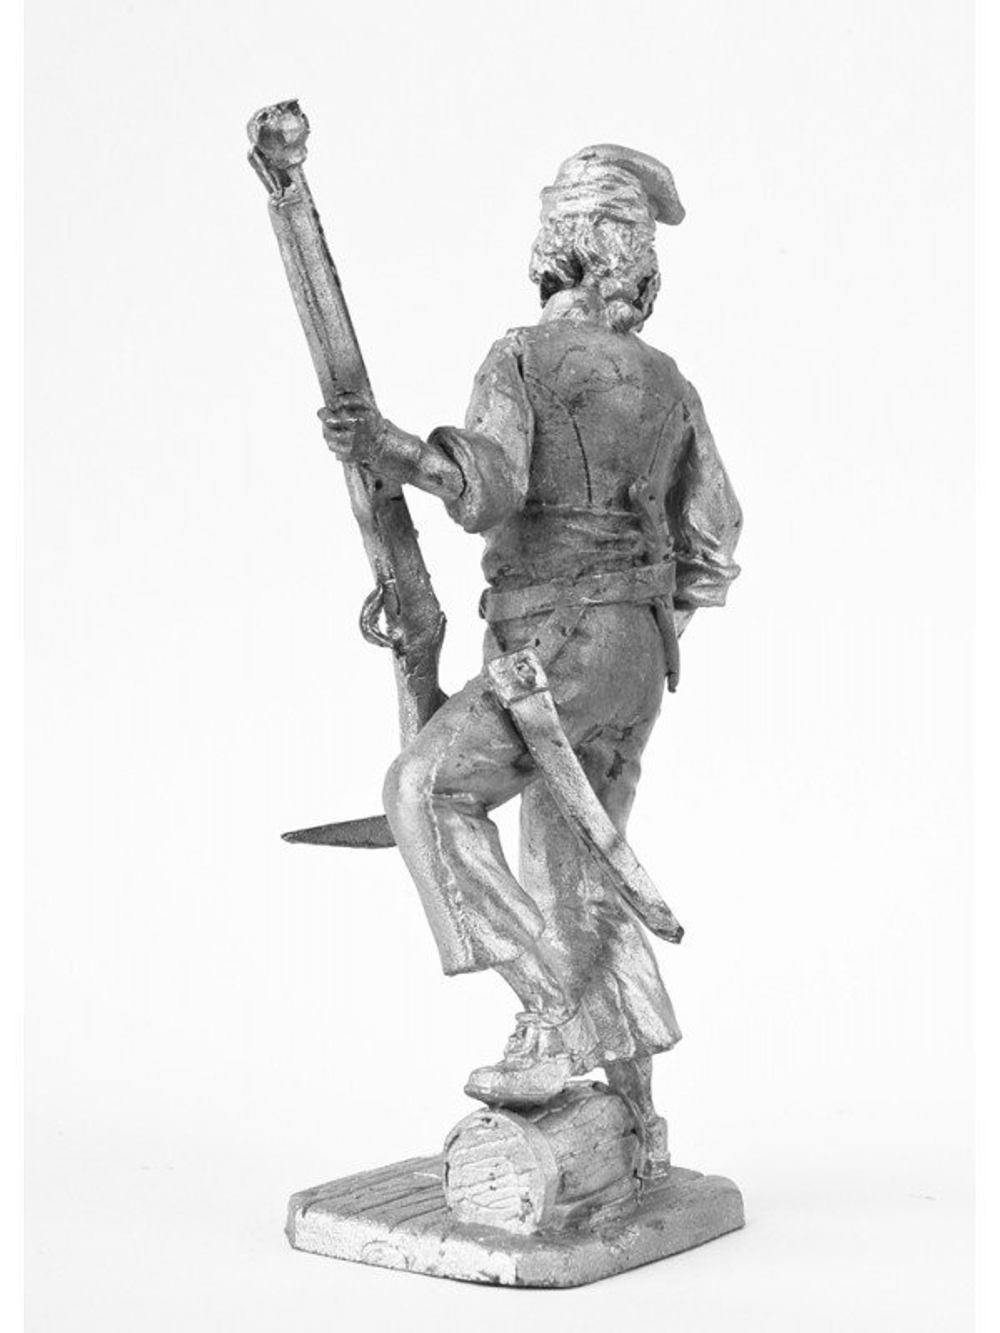 Оловянный солдатик Моряк абордажной команды, Франция